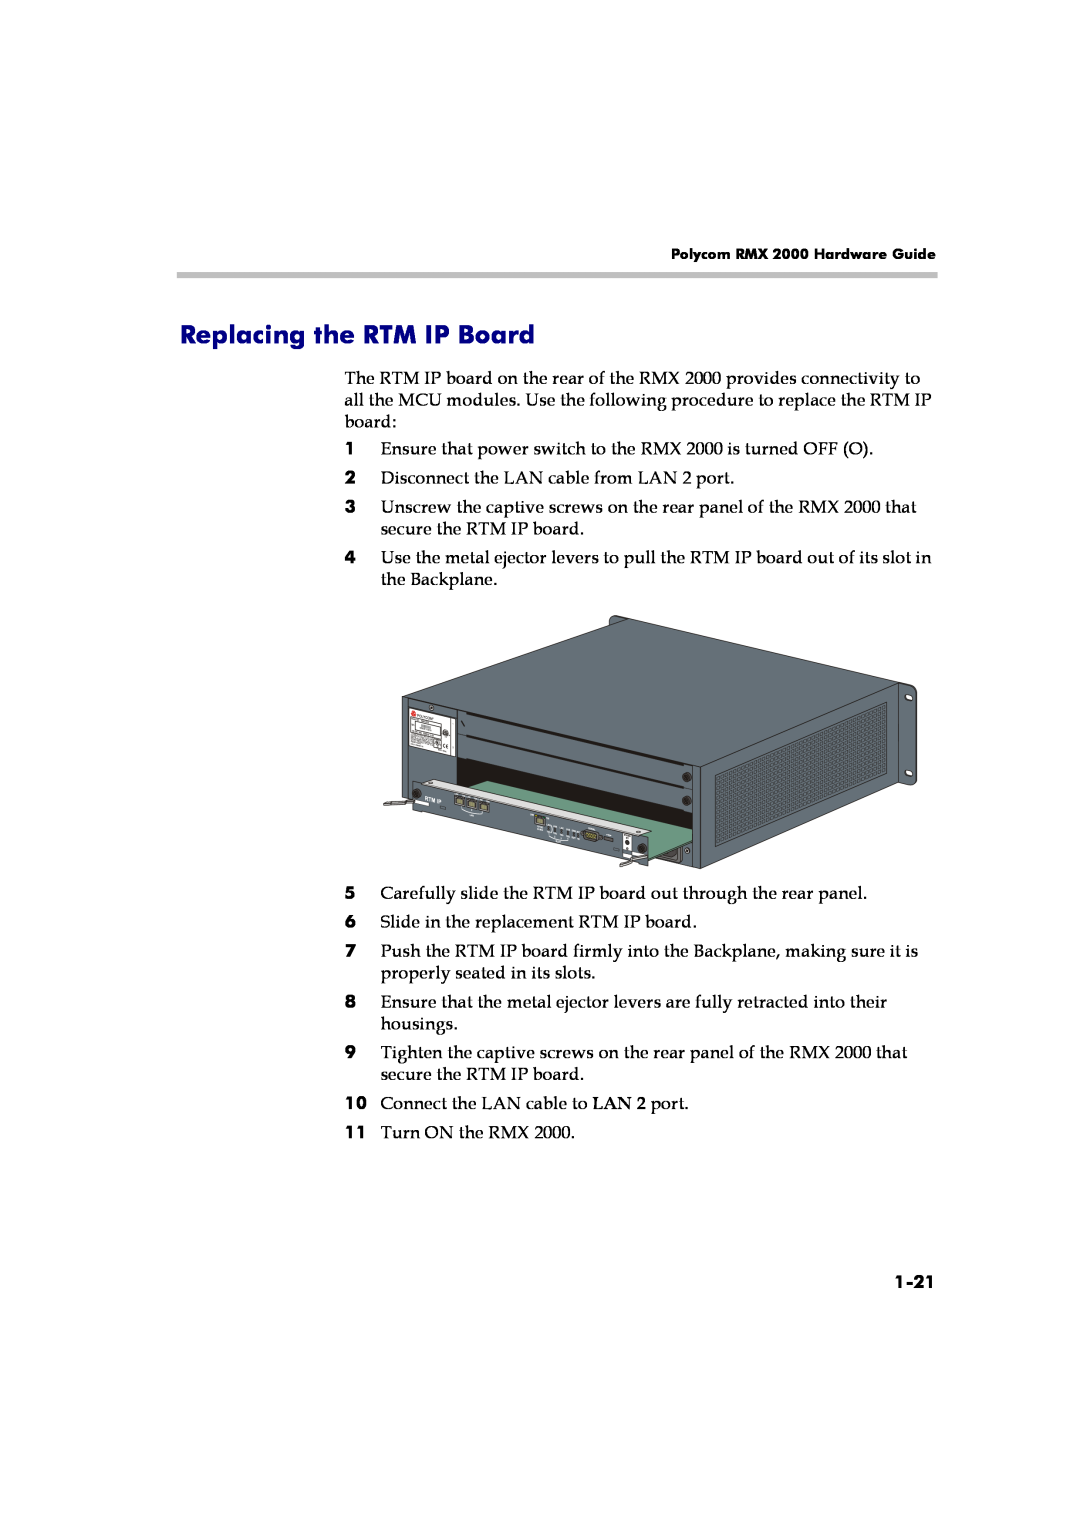 Polycom RMX 2000 manual Replacing the RTM IP Board, 1-21 